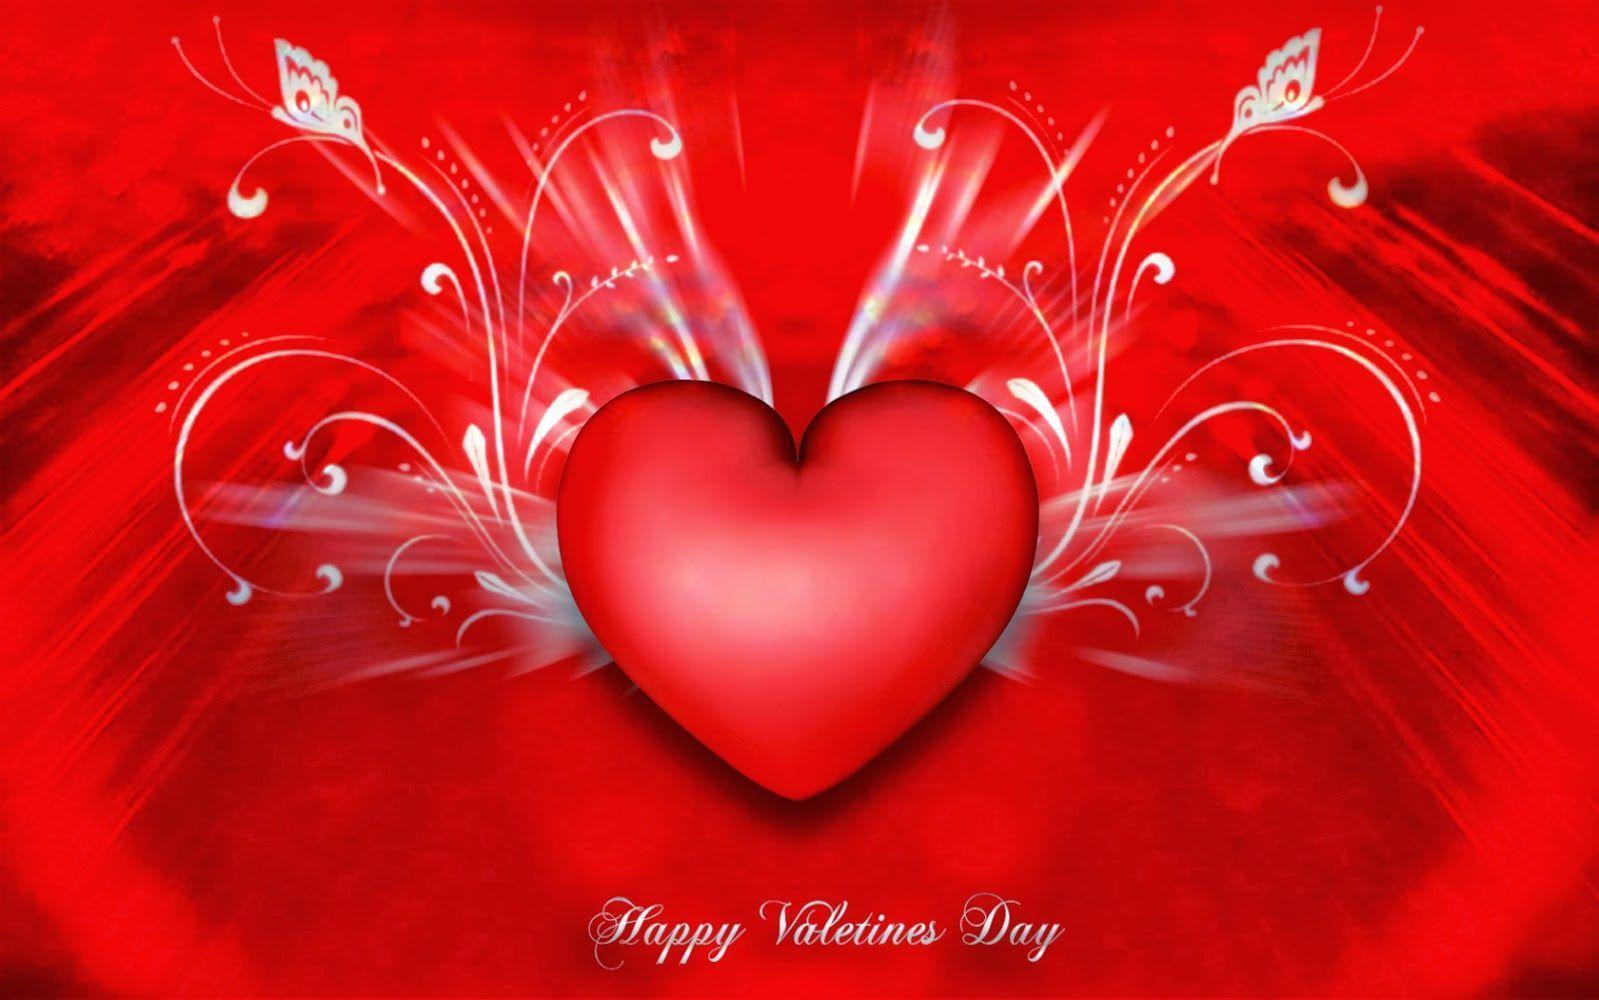 Romatic Happy Valentines Day 2014 Wallpaper (HD) World photo